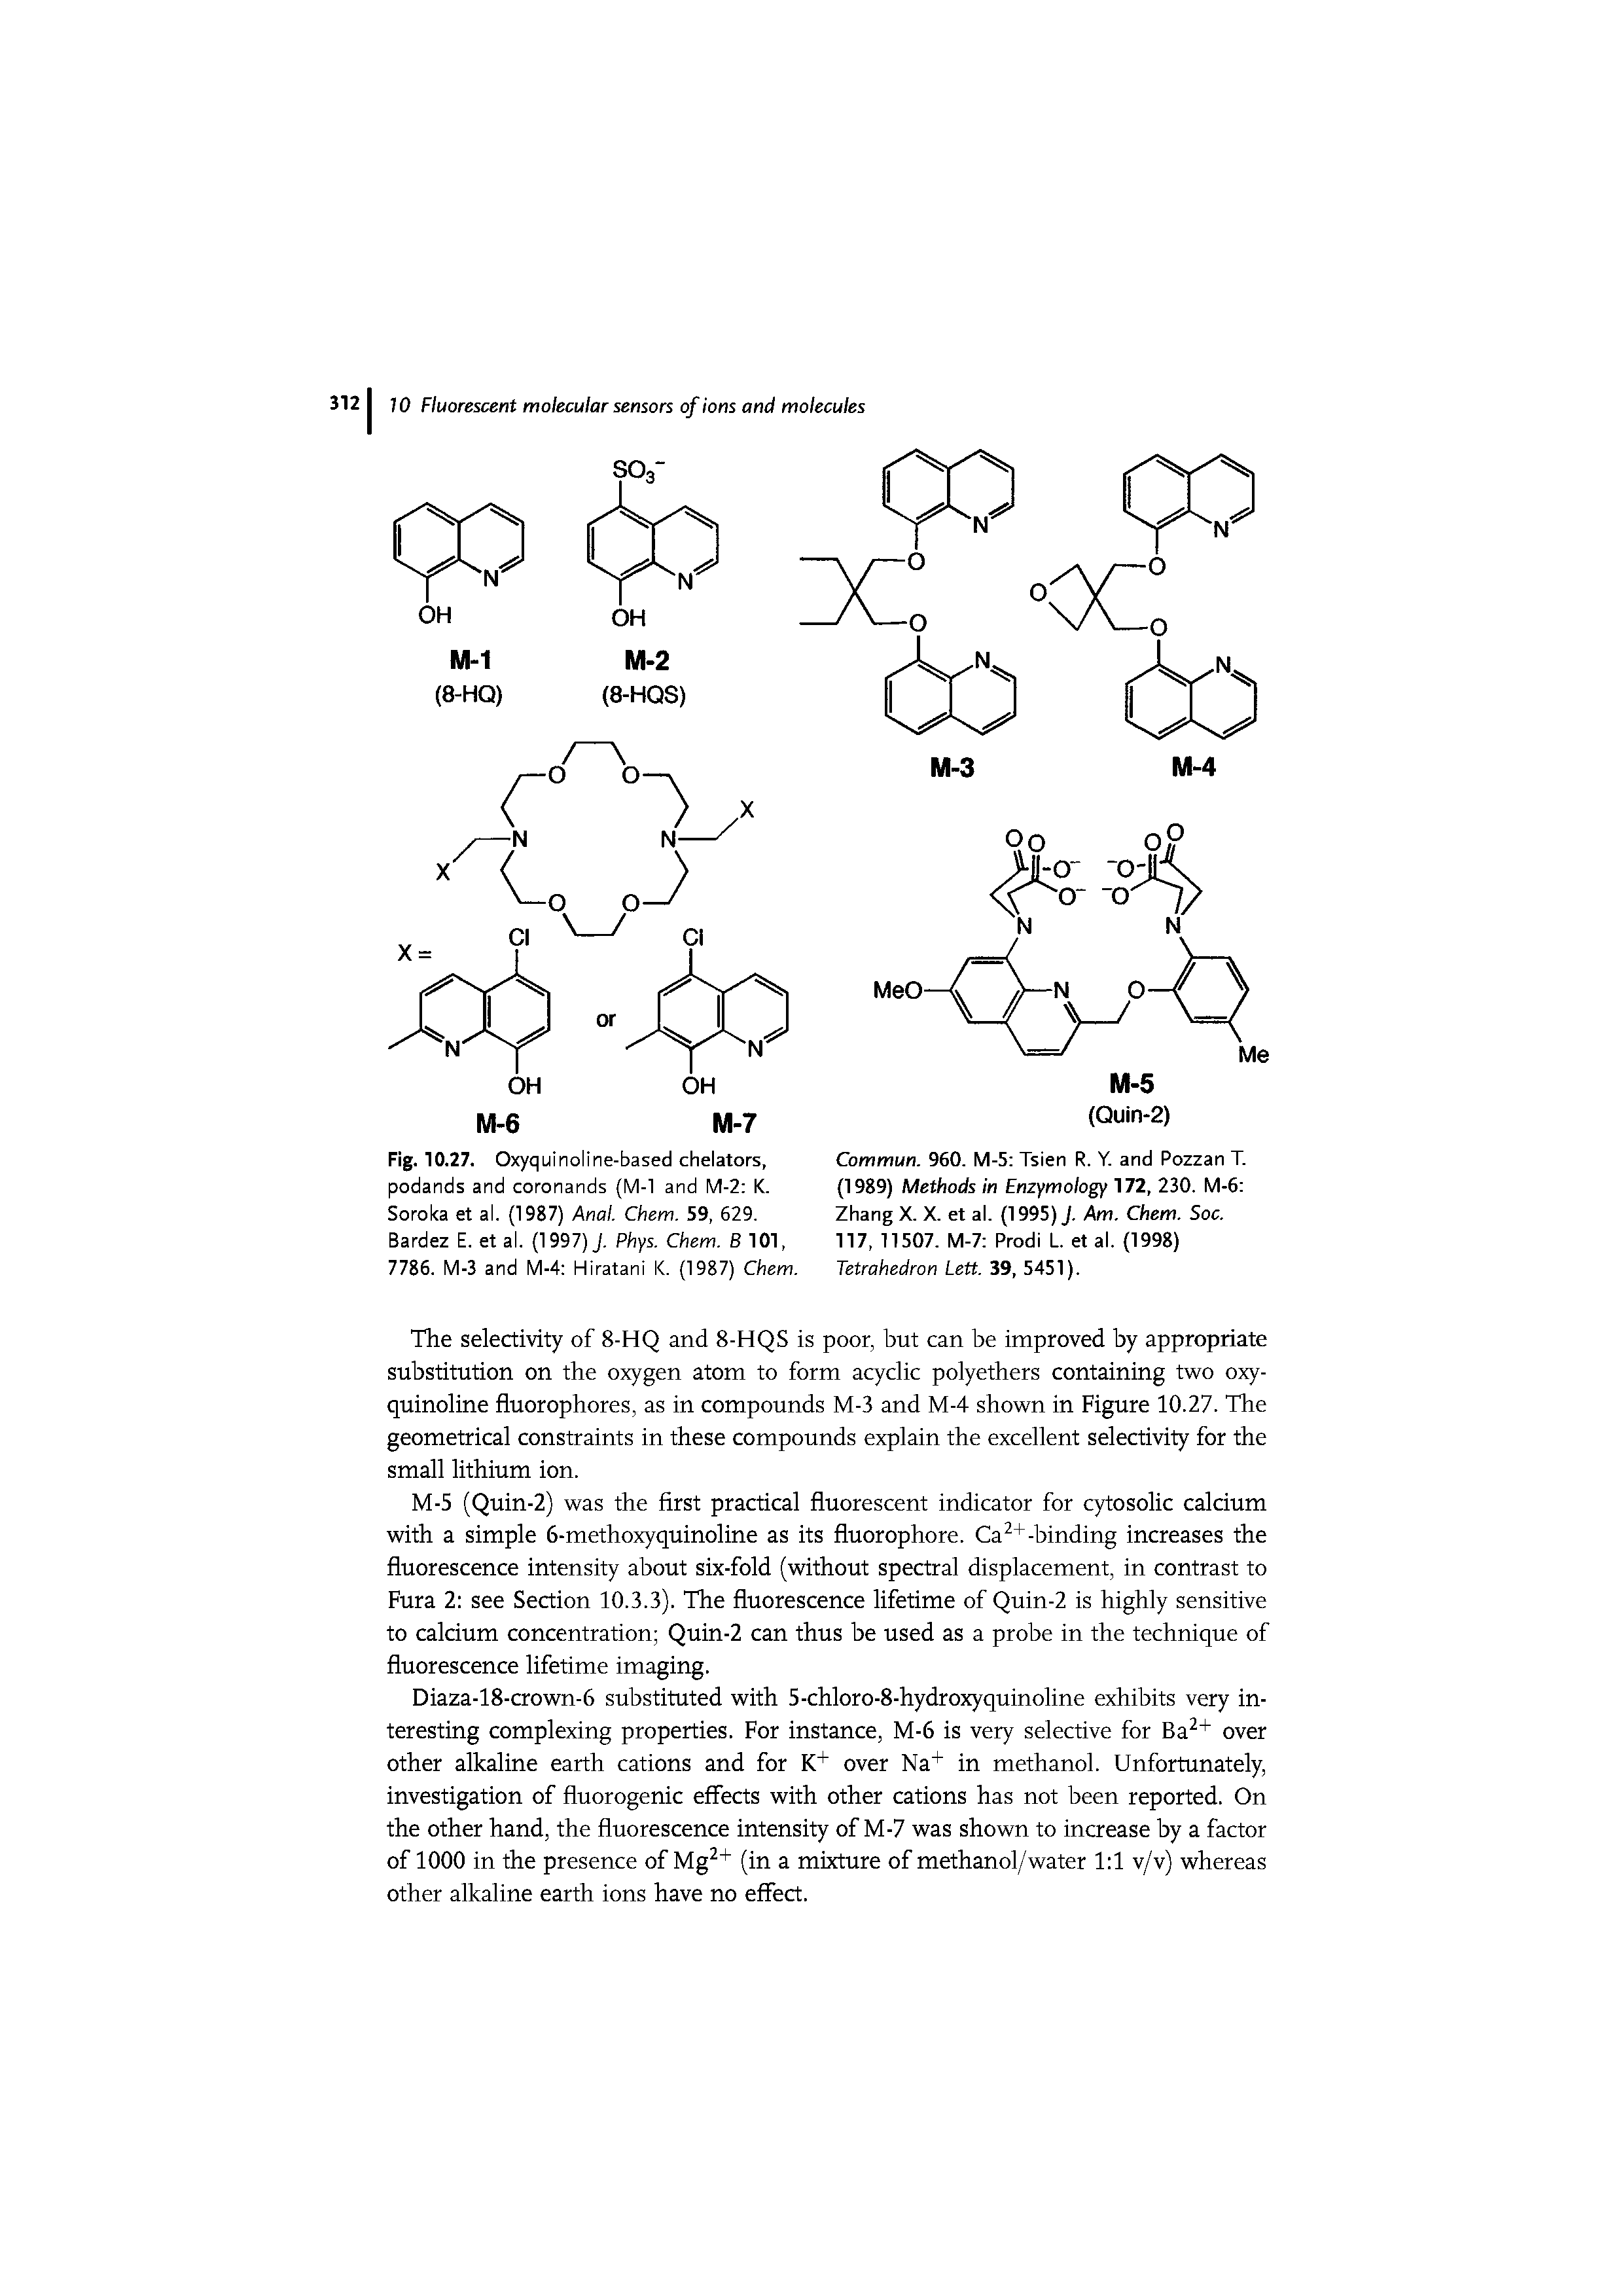 Fig. 10.27. Oxyquinoline-based chelators, podands and coronands (M-l and M-2 K. Soroka et al. (1987) Anal. Chem. 59, 629. Bardez E. et al. (1997) J. Phys. Chem. B 101, 7786. M-3 and M-4 Hiratani K. (1987) Chem.